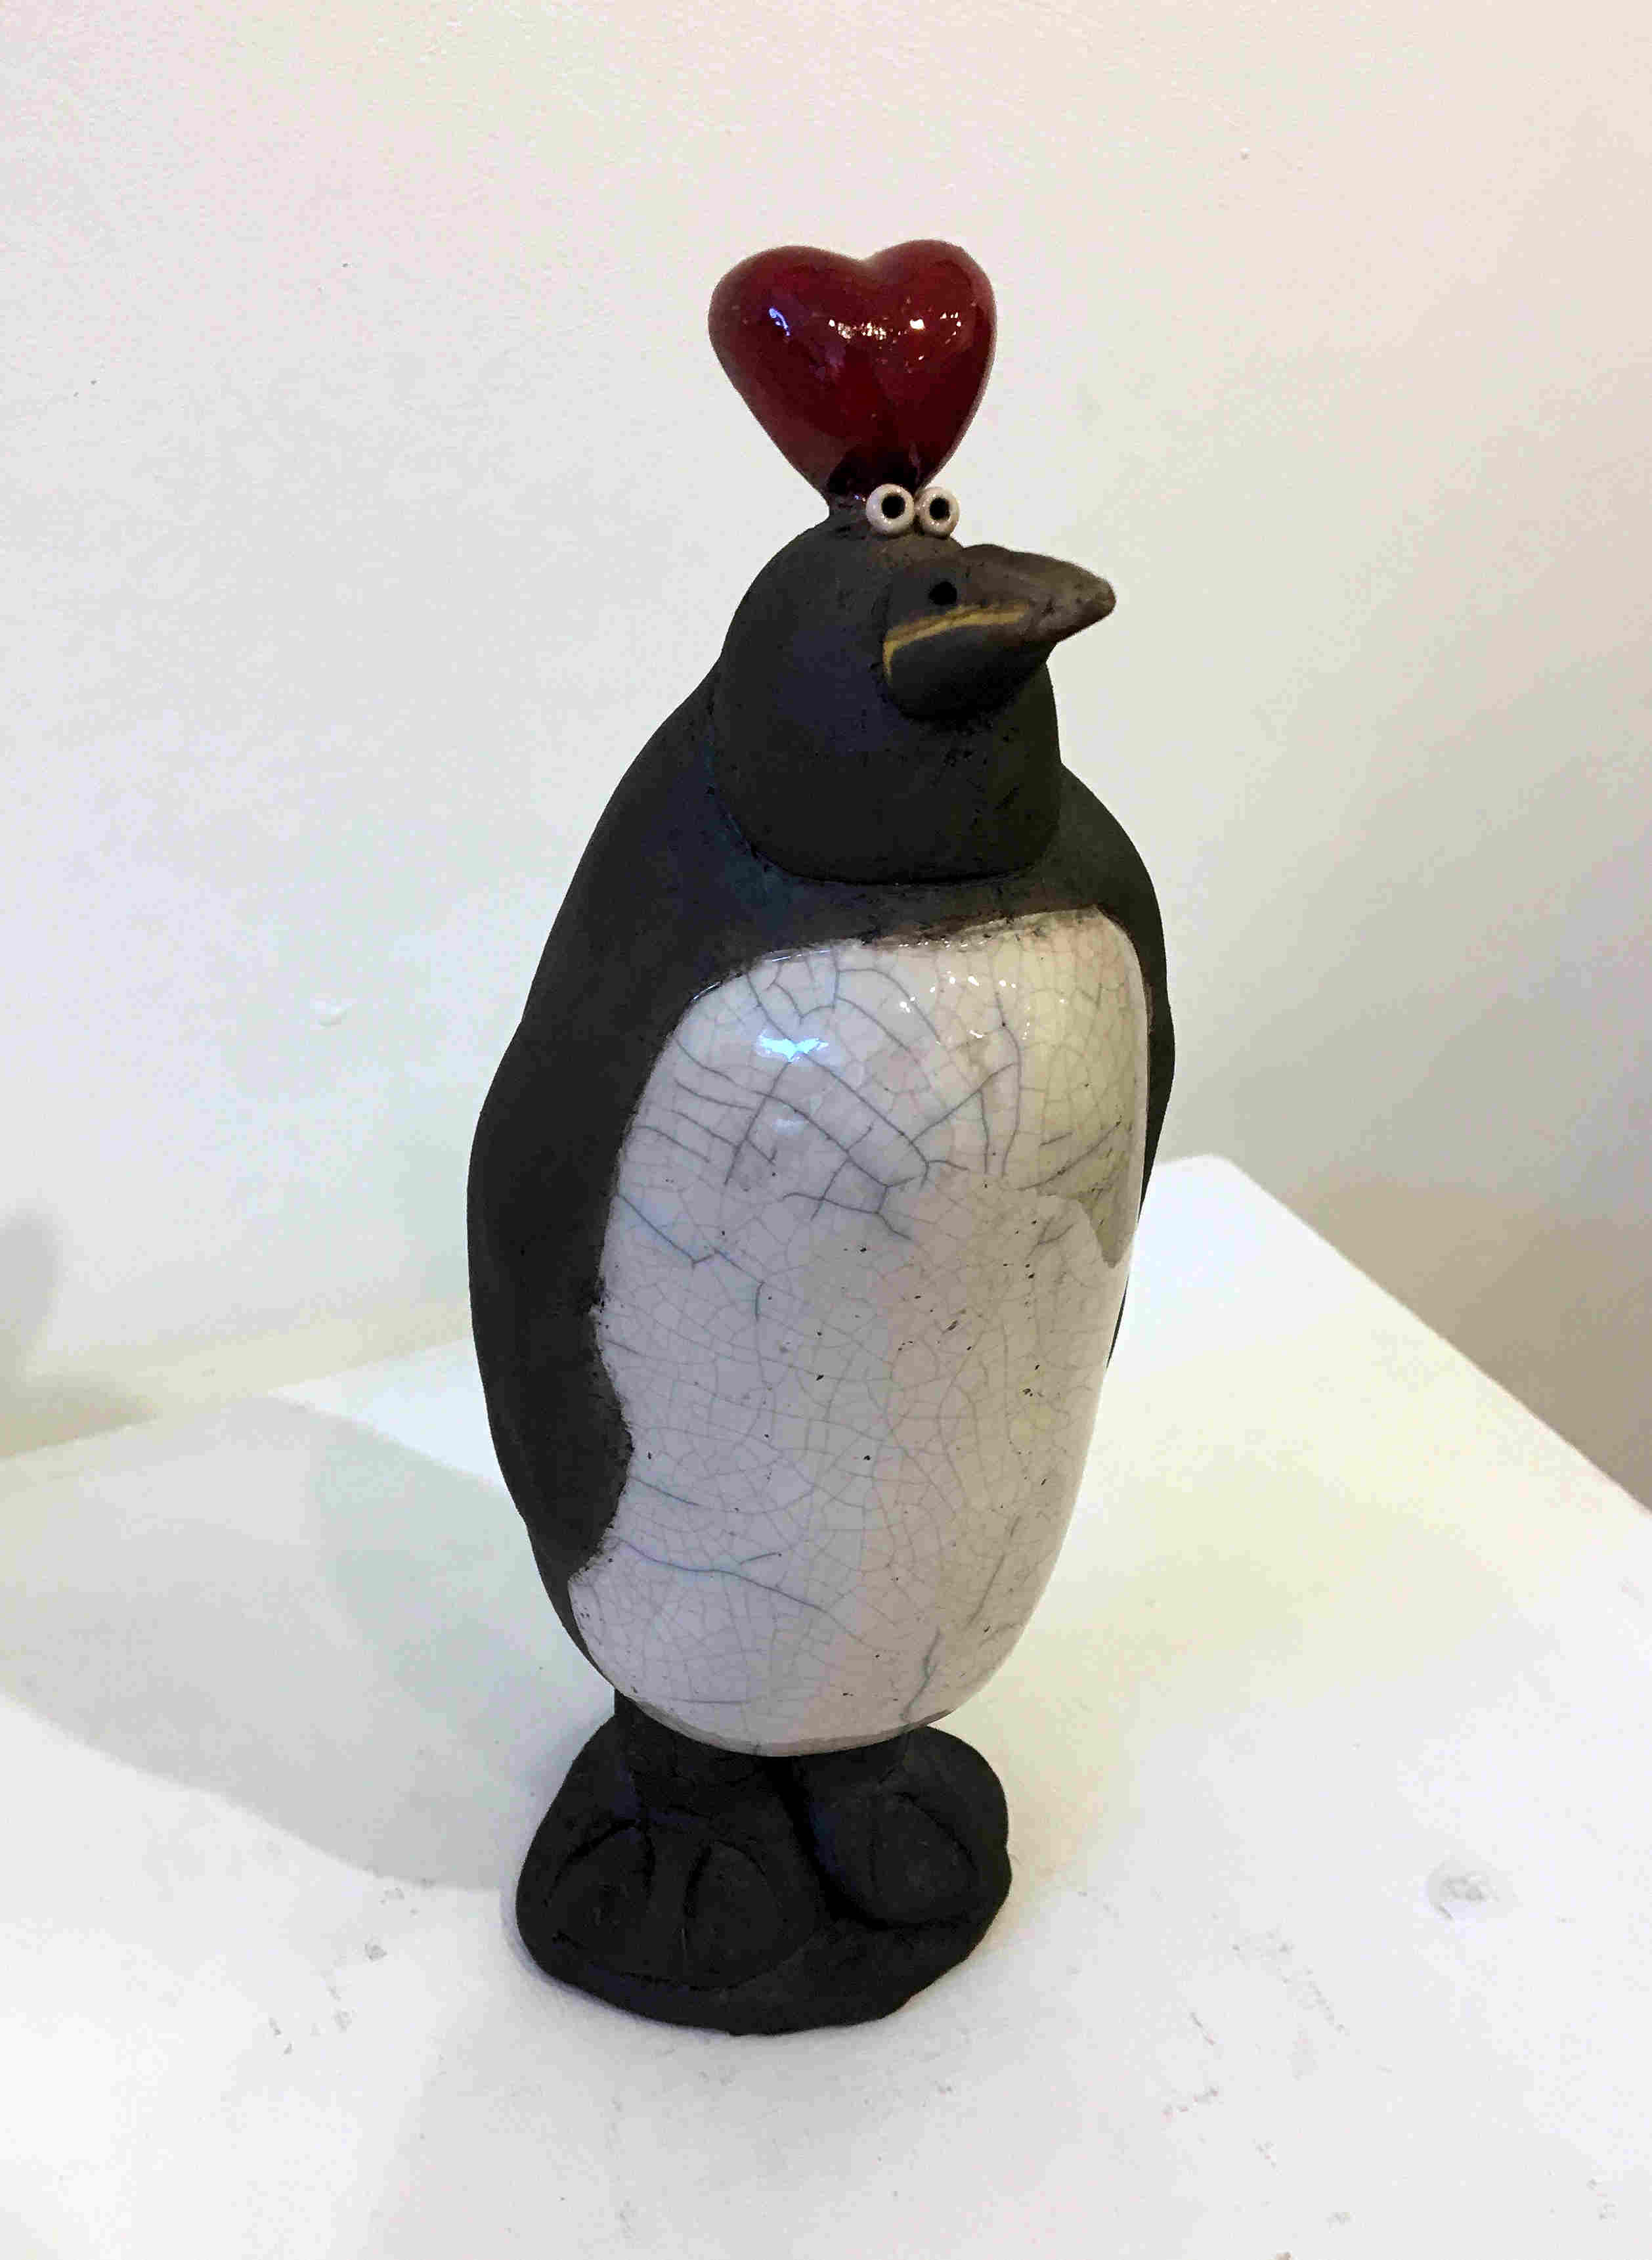 'Penguin with Heart (I)' by artist Alex Johannsen